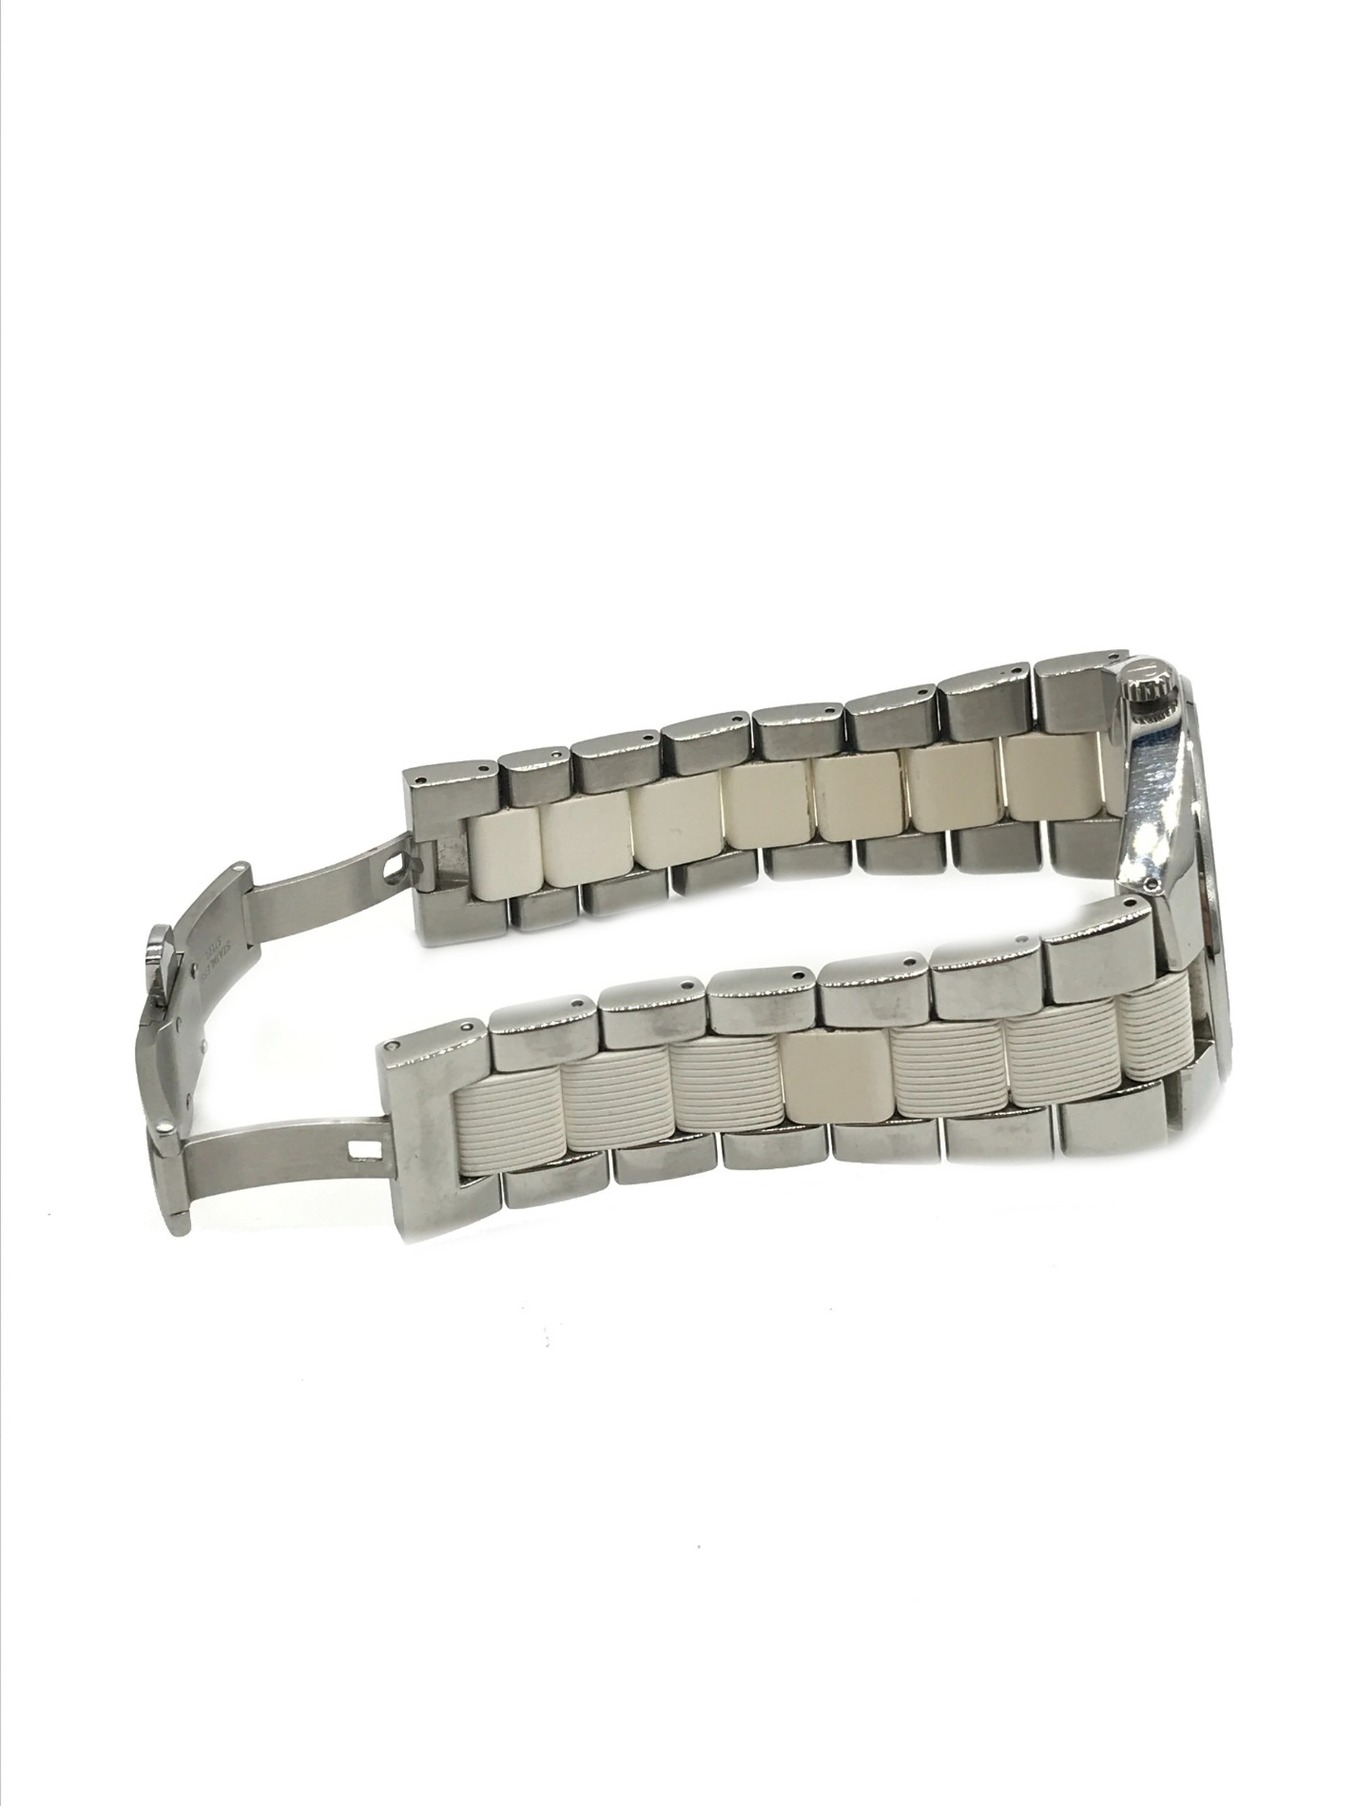 Calvin Klein (カルバンクライン) 腕時計　クォーツ サイズ:実寸サイズにてご確認ください。